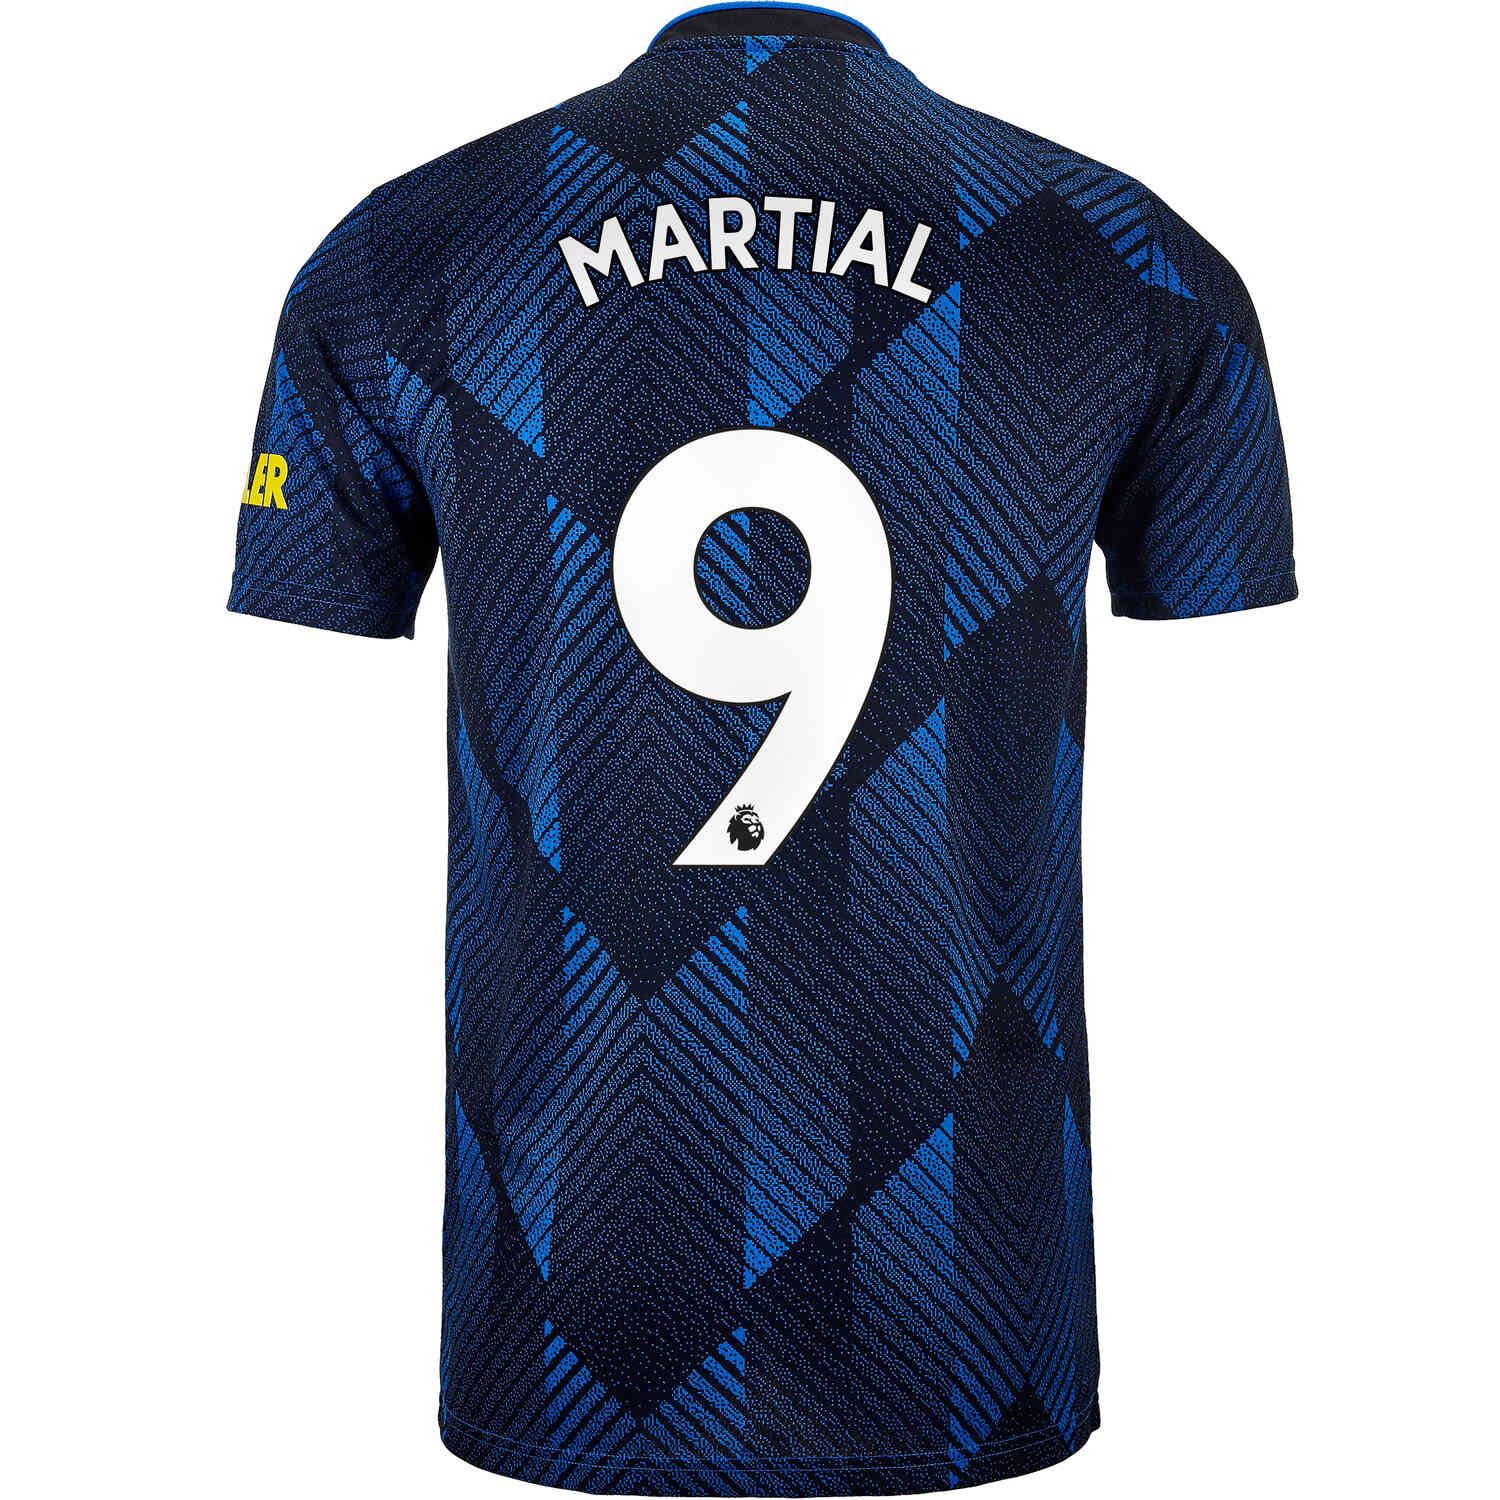 Martial Jersey - SoccerPro